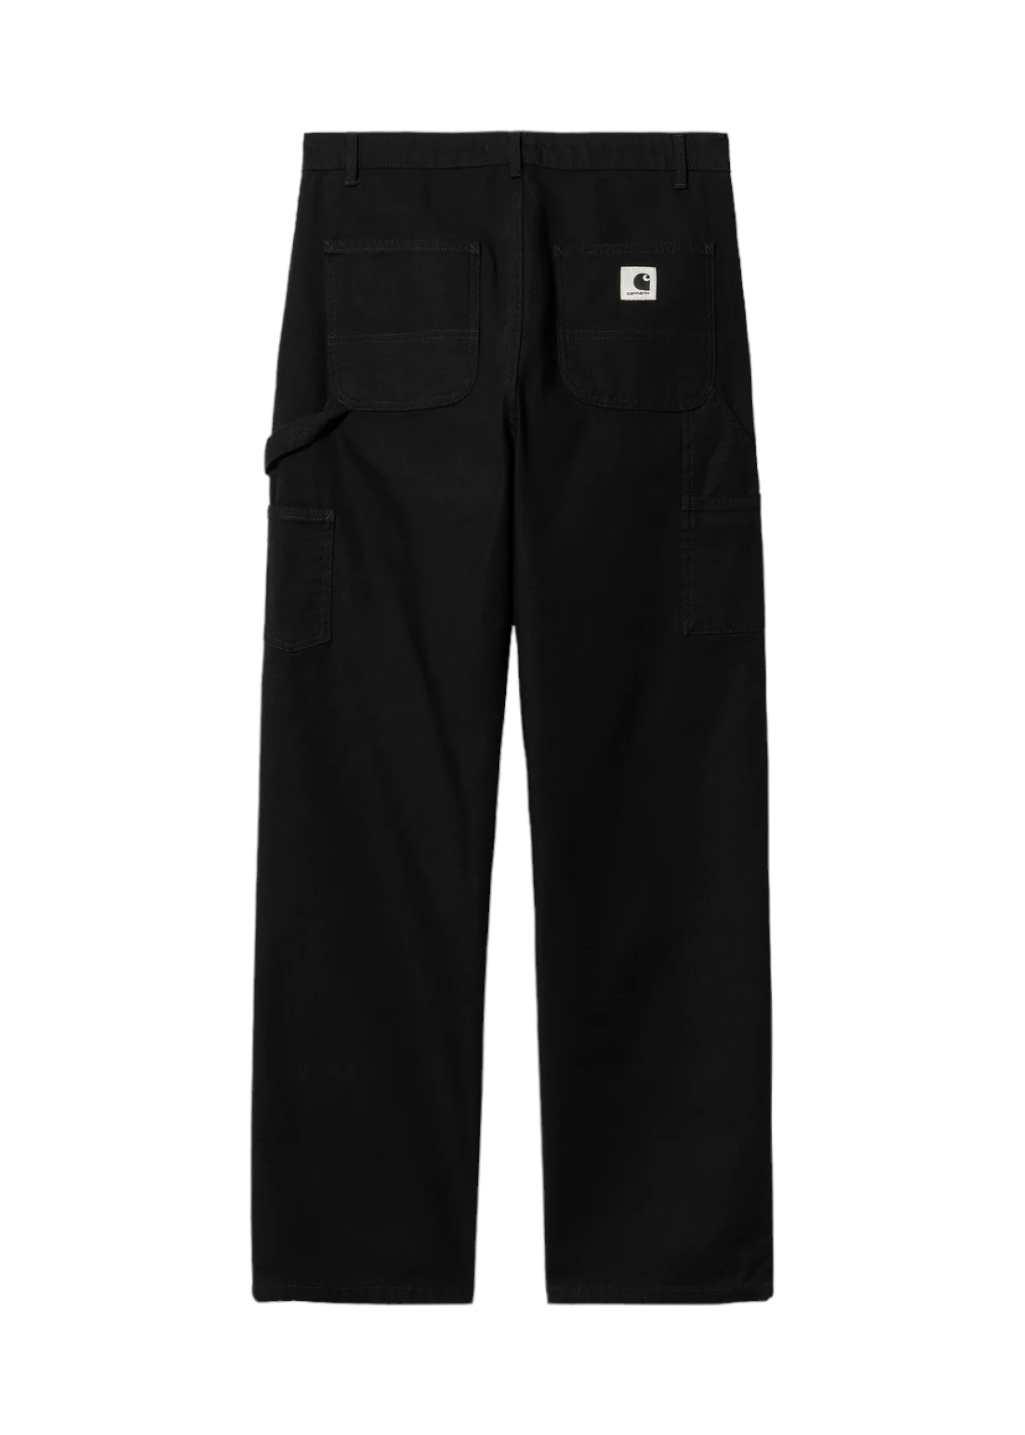 Shop Carhartt WIP W' Pierce Pant Straight Hudson Pants women (black rinsed)  online